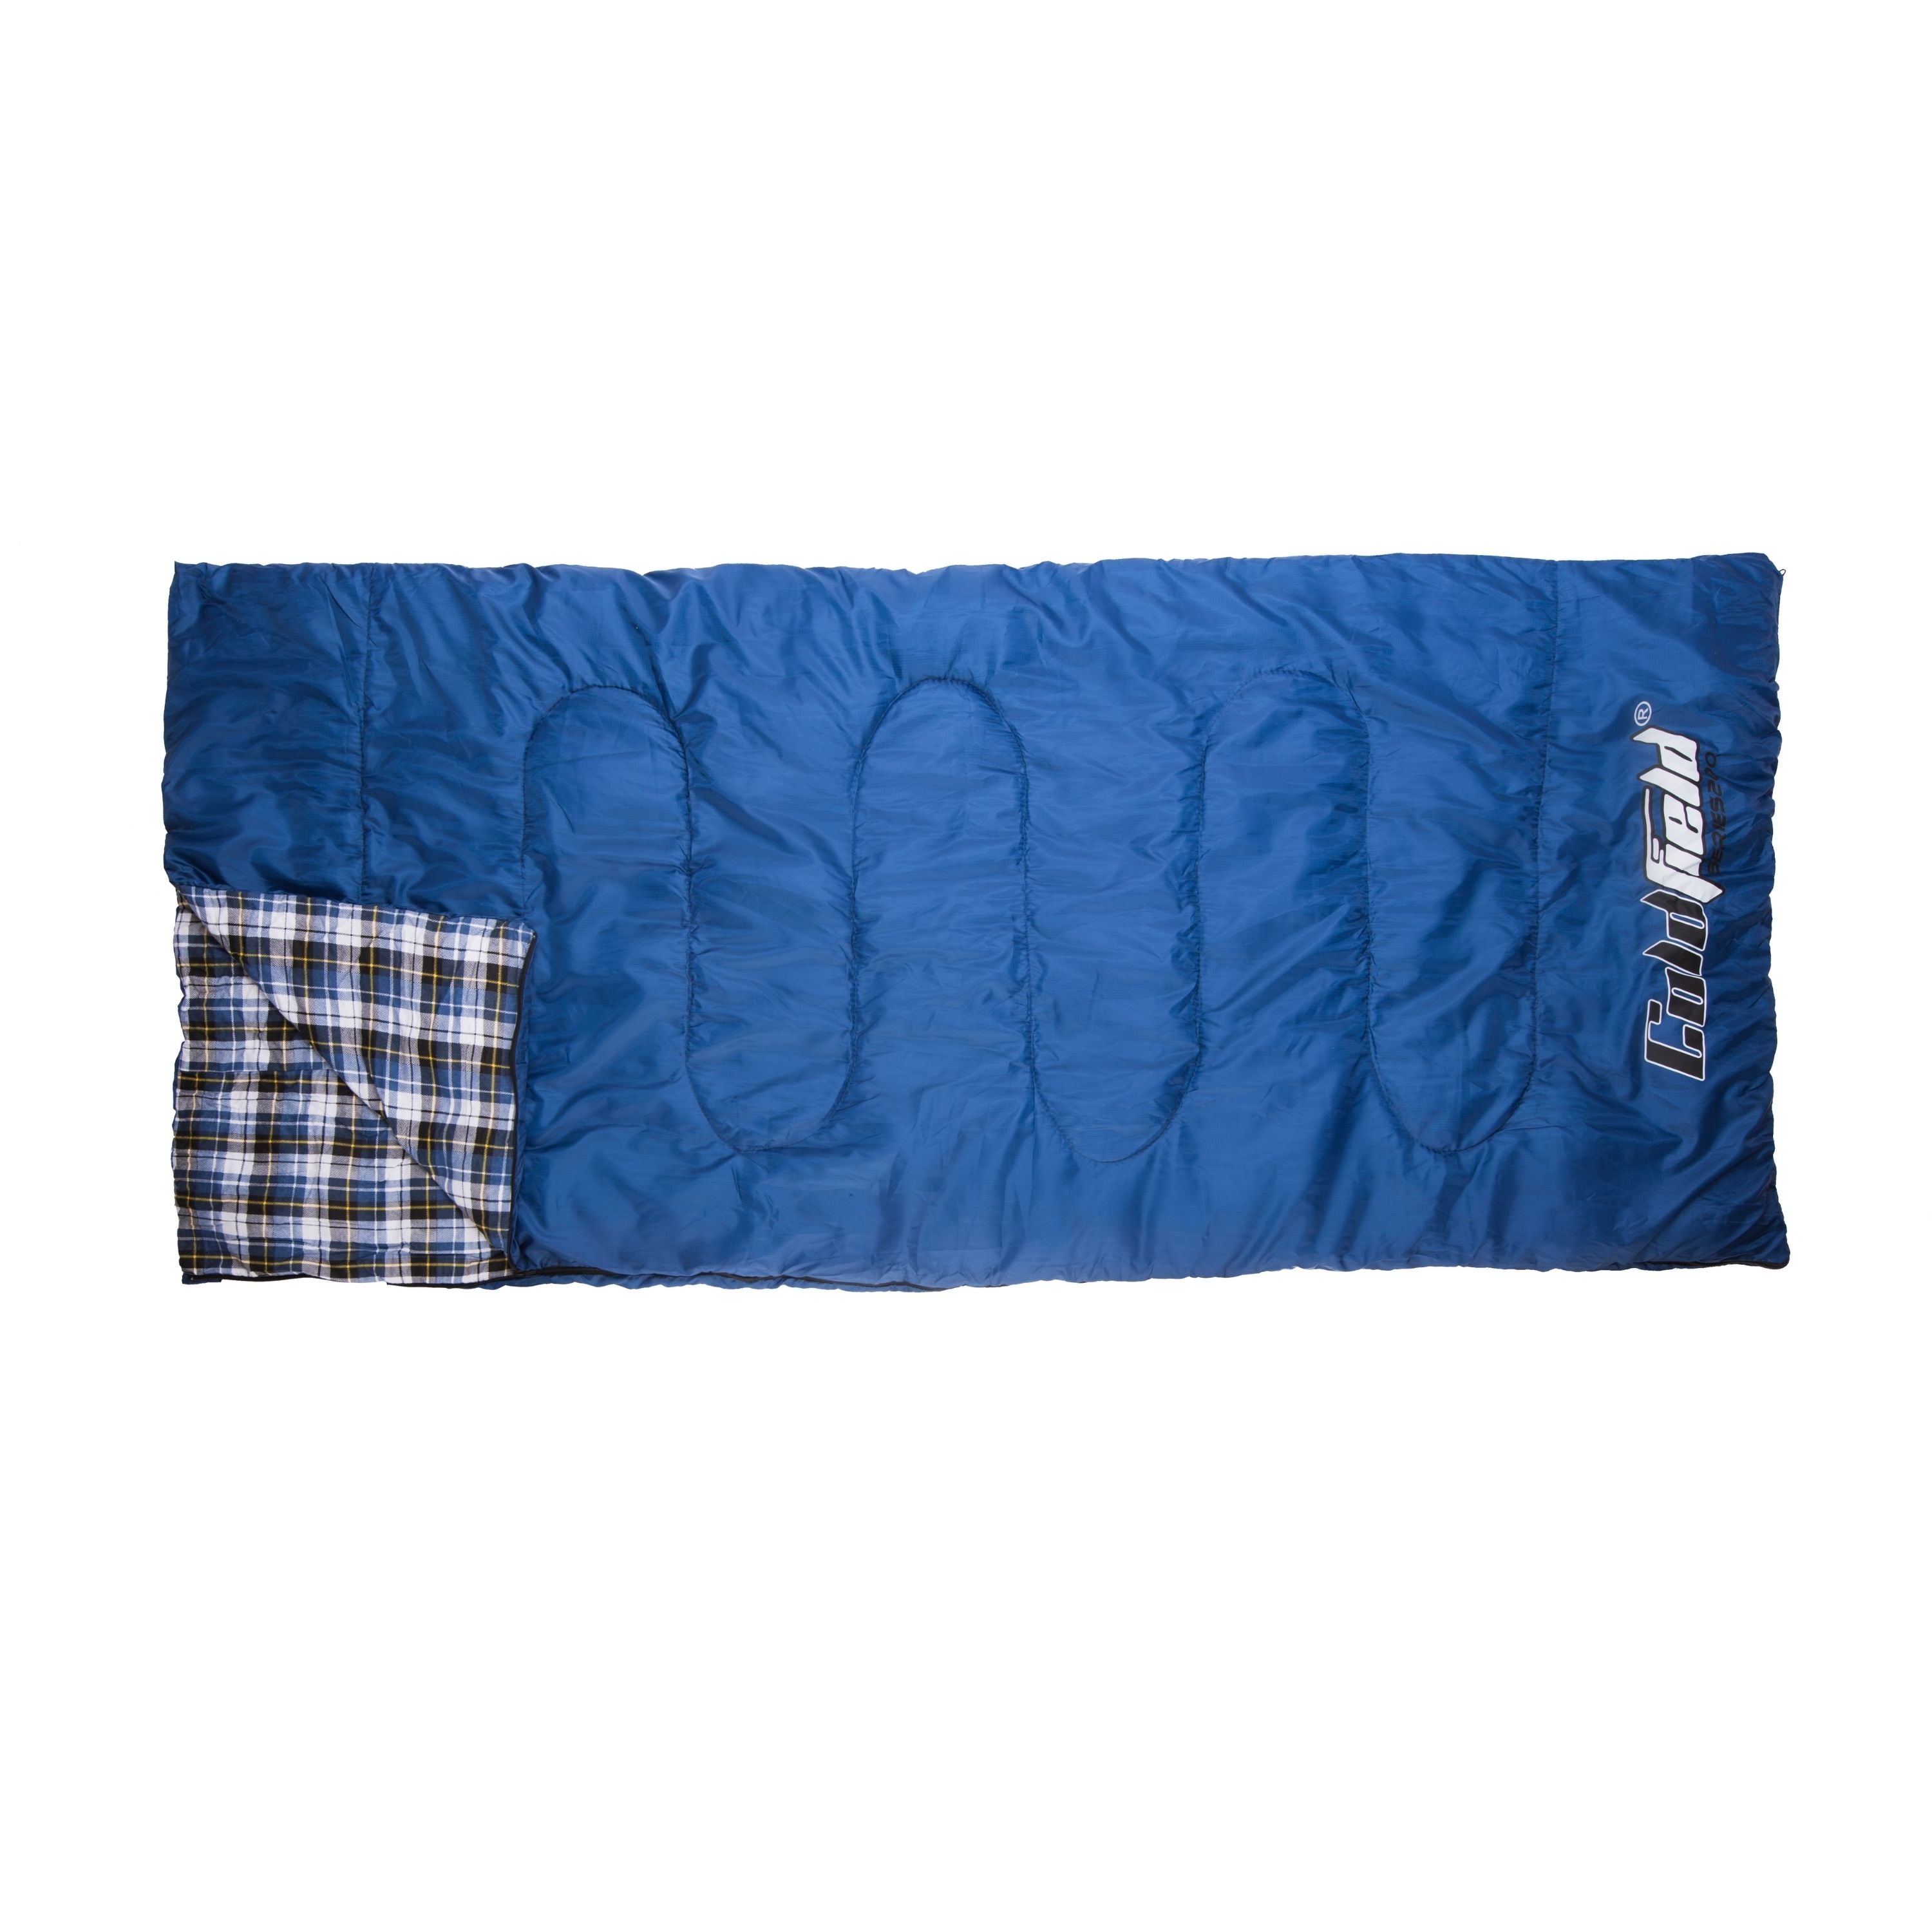 Sleeping bag 96 X 208 cm (-10°C)